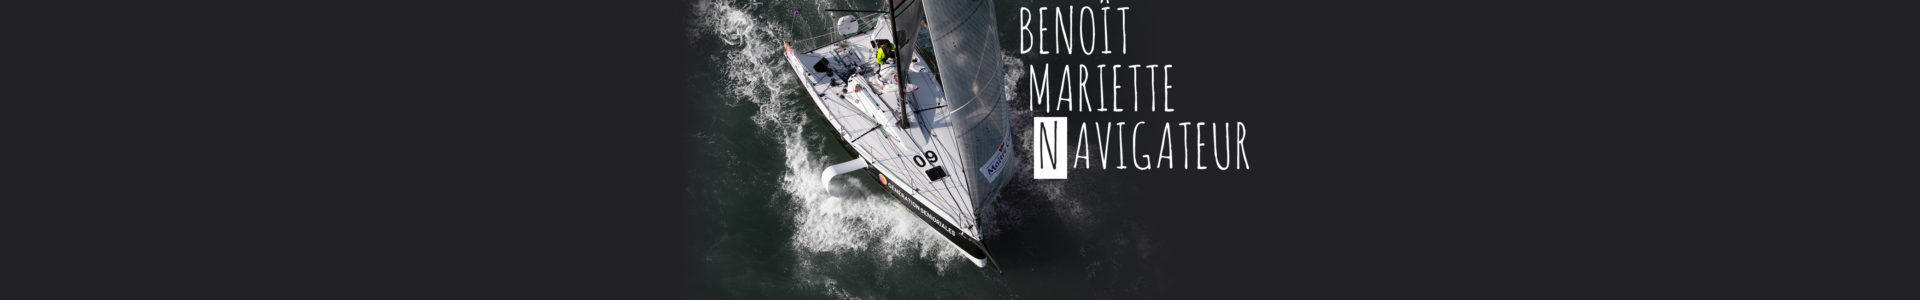 Benoît MARIETTE - Navigateur